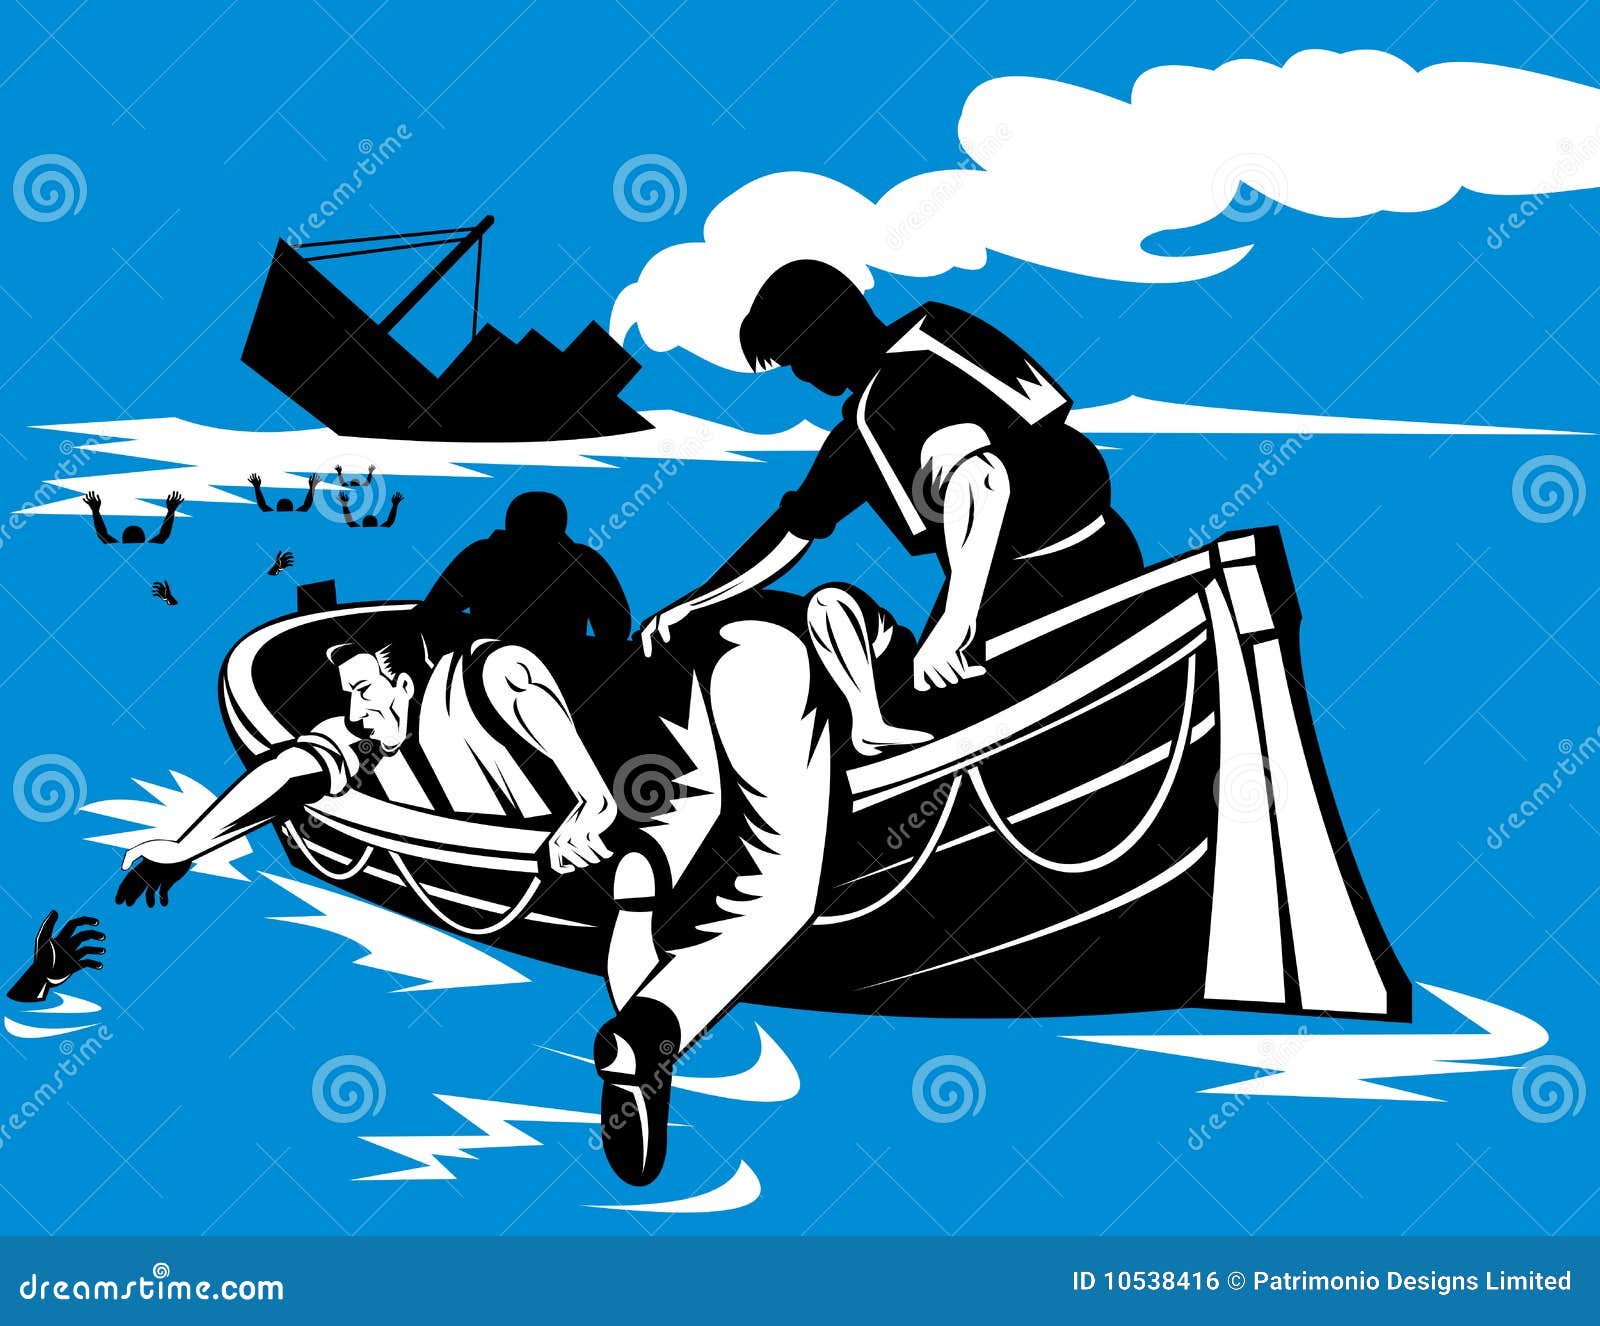 sinking boat clip art free - photo #20